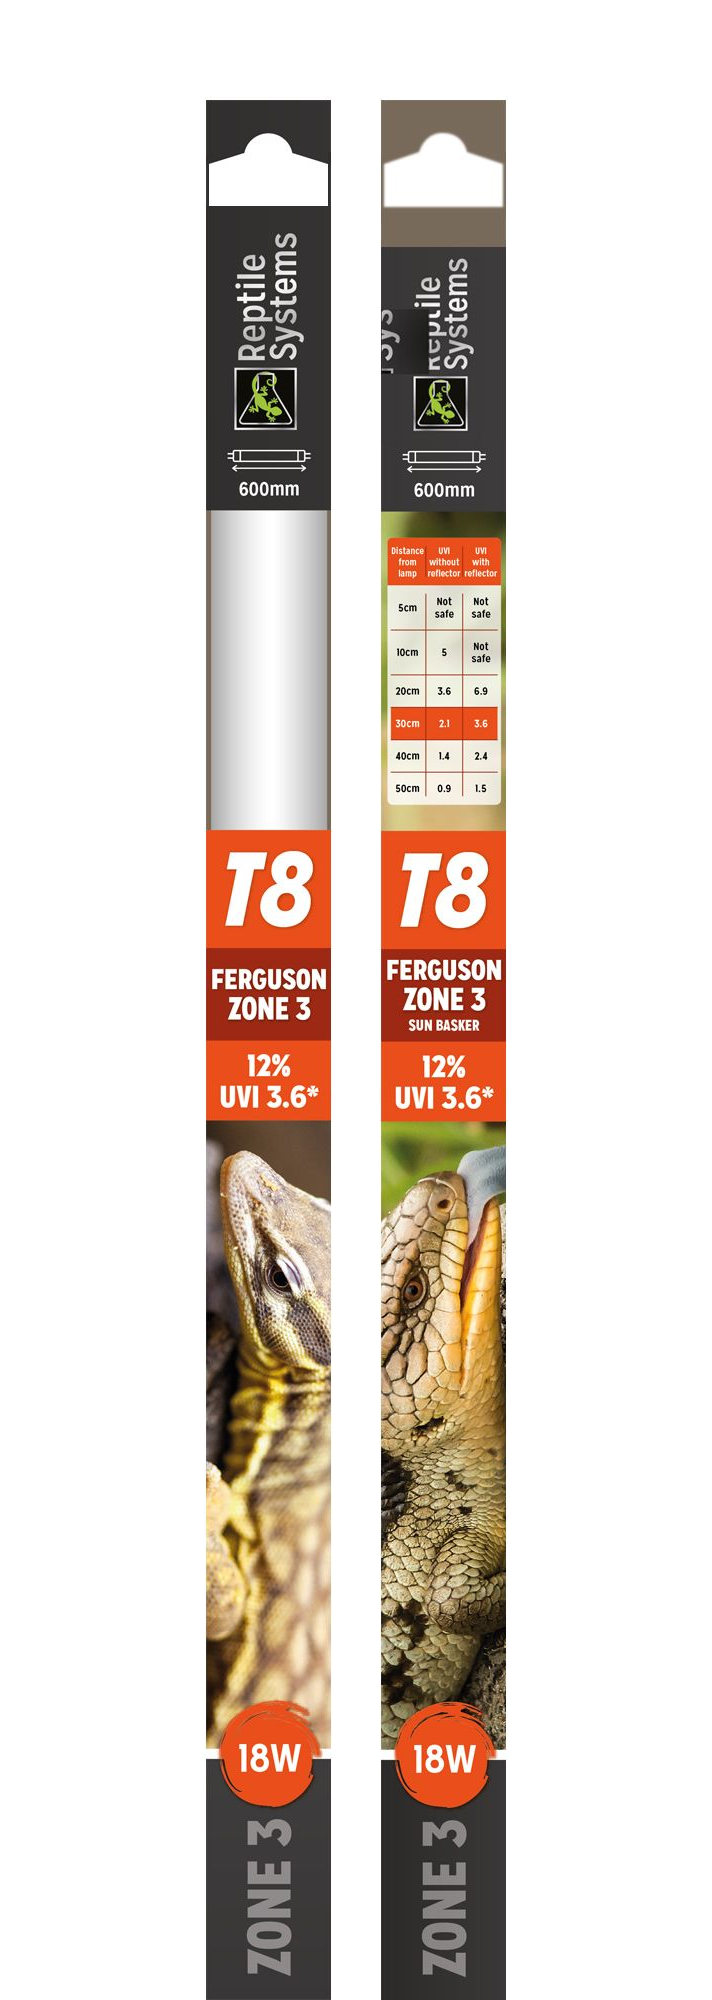 15-38W Reptile Lamp T8 , Ferguson Zone 3 - UVB 12%